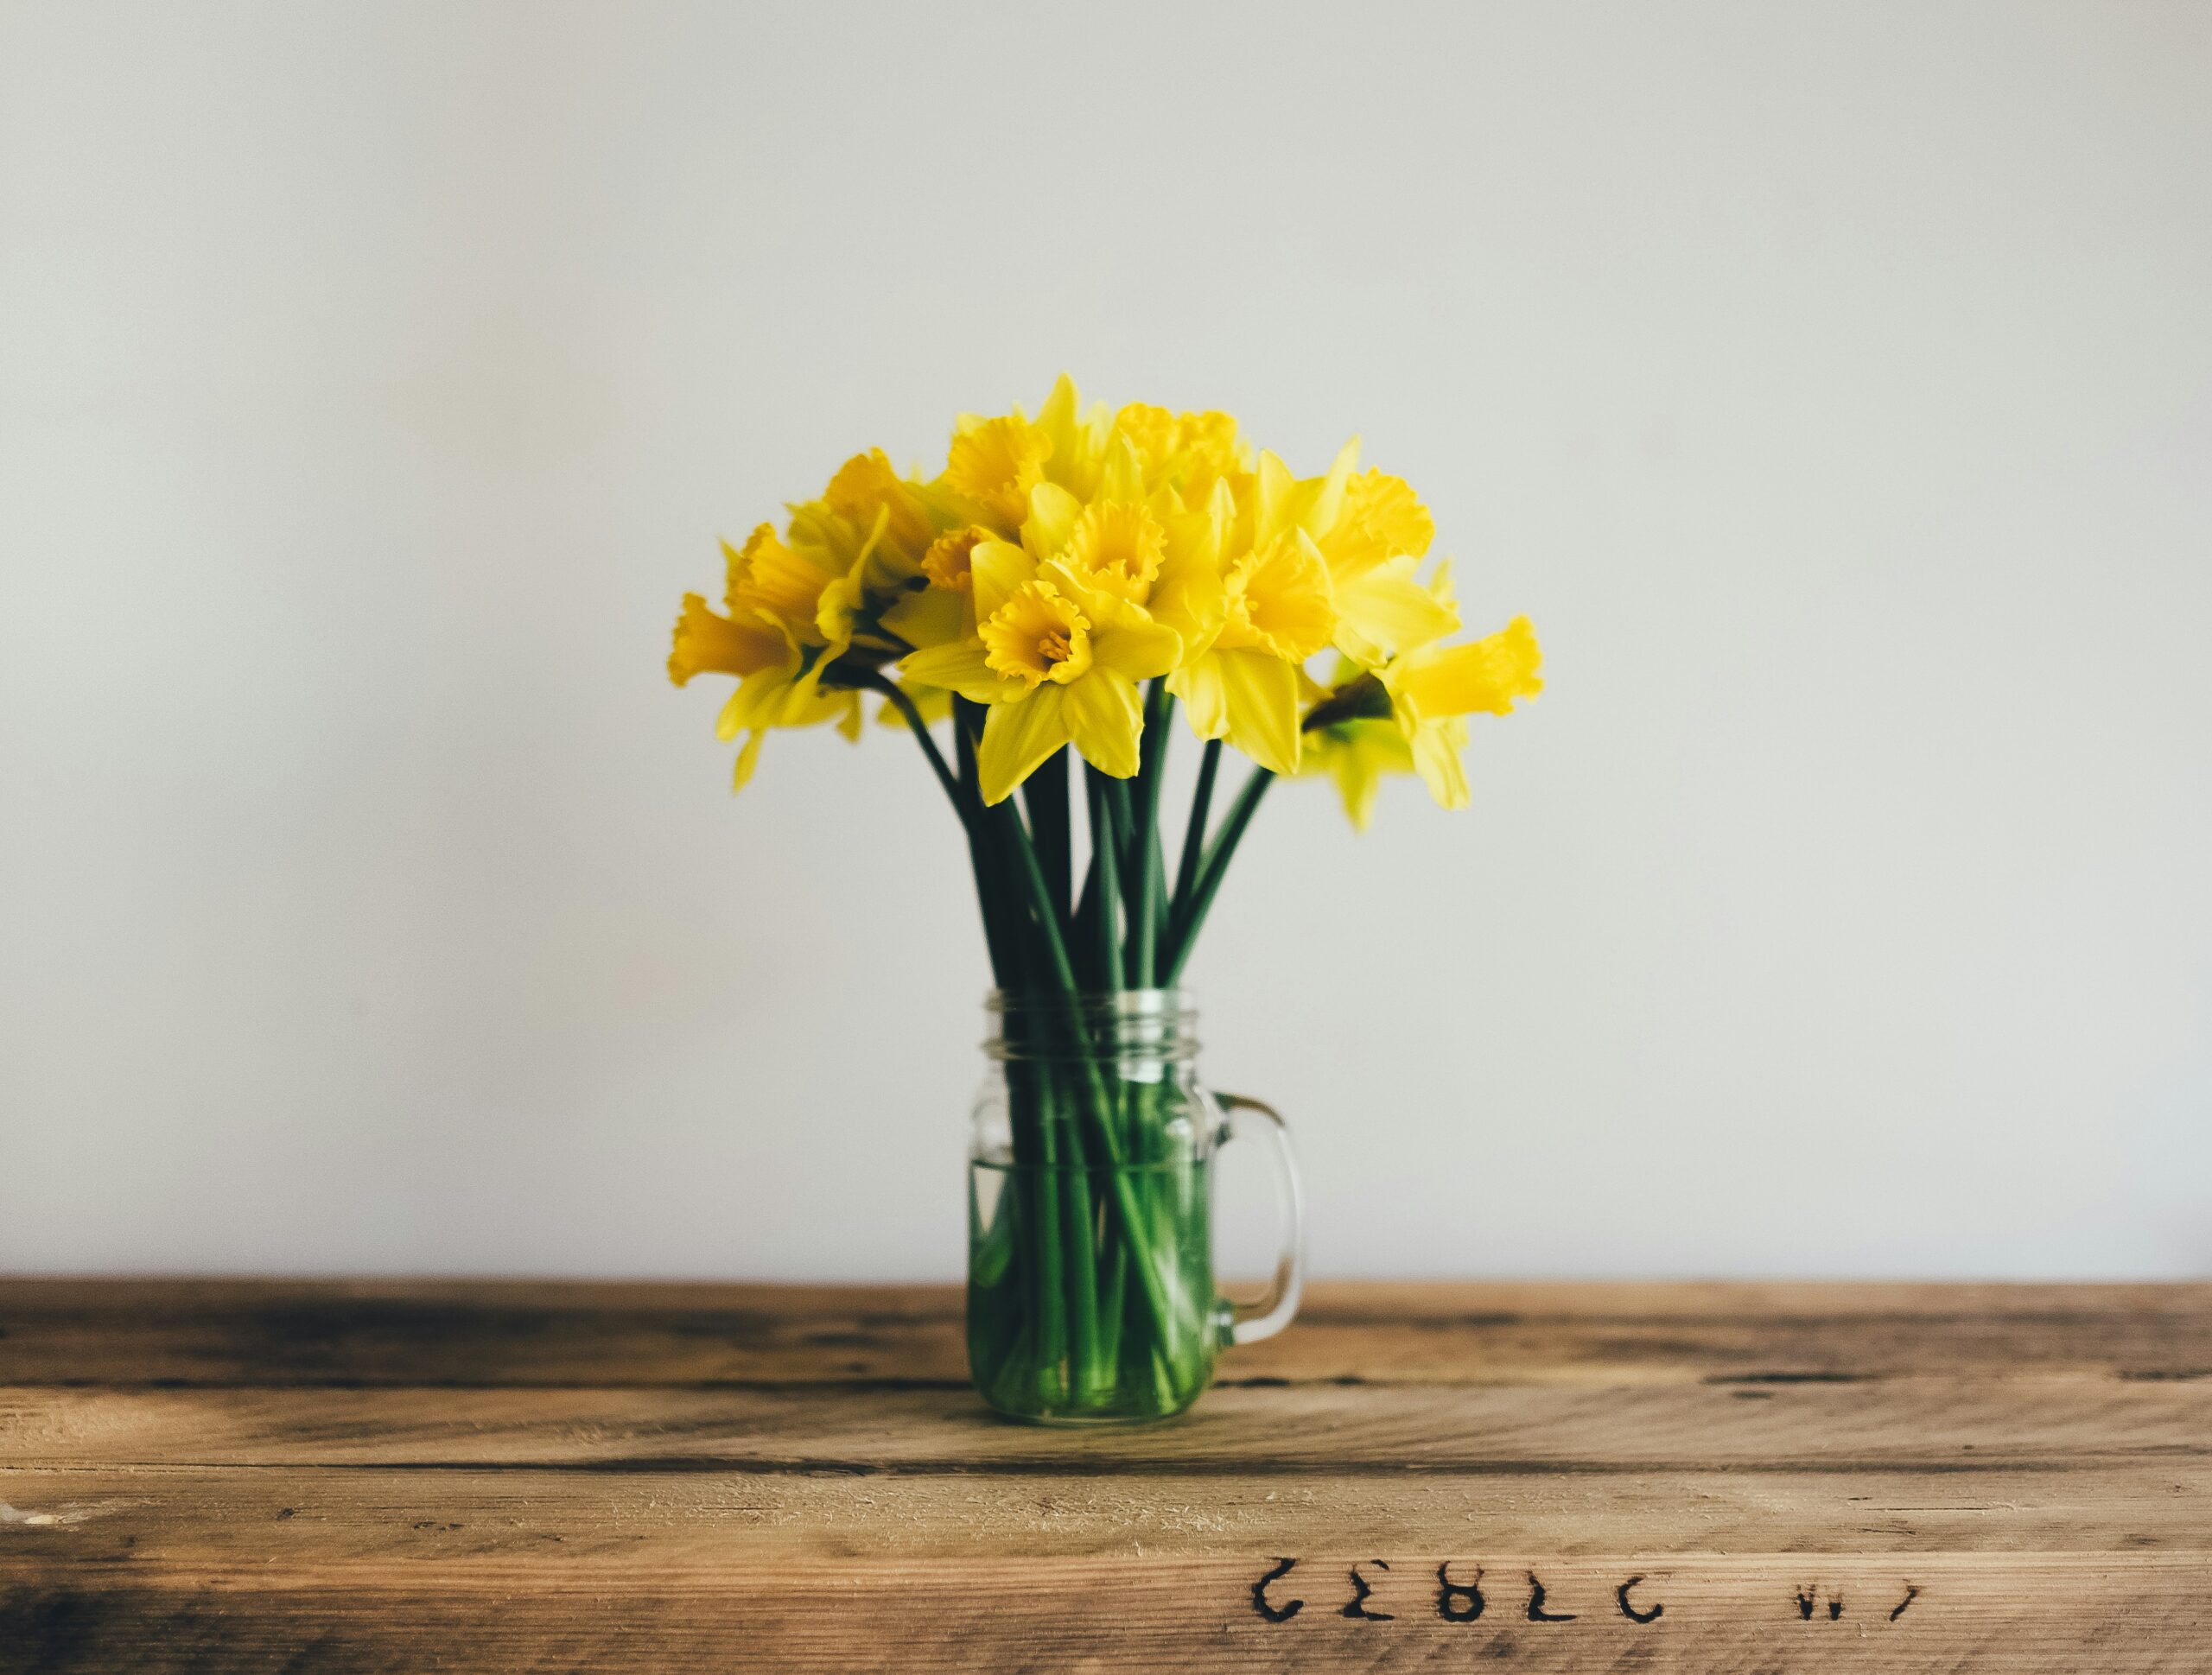 A mason jar of fresh cut daffodils sits on a woodblock table, signifying spring.